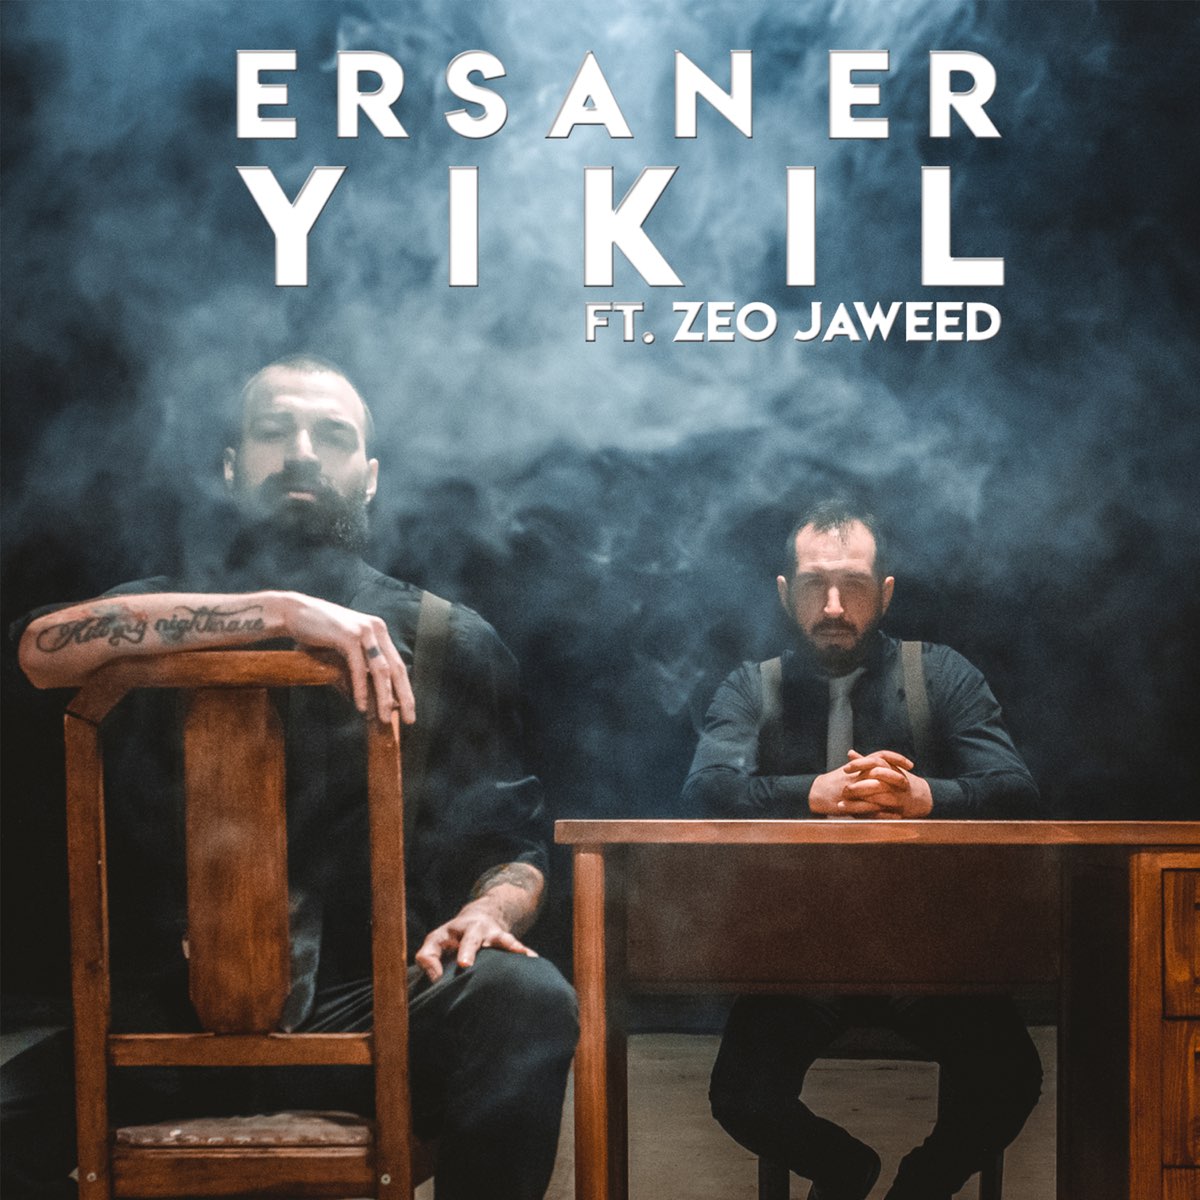 Yıkıl (feat. Zeo Jaweed) - Single by Ersan Er on Apple Music